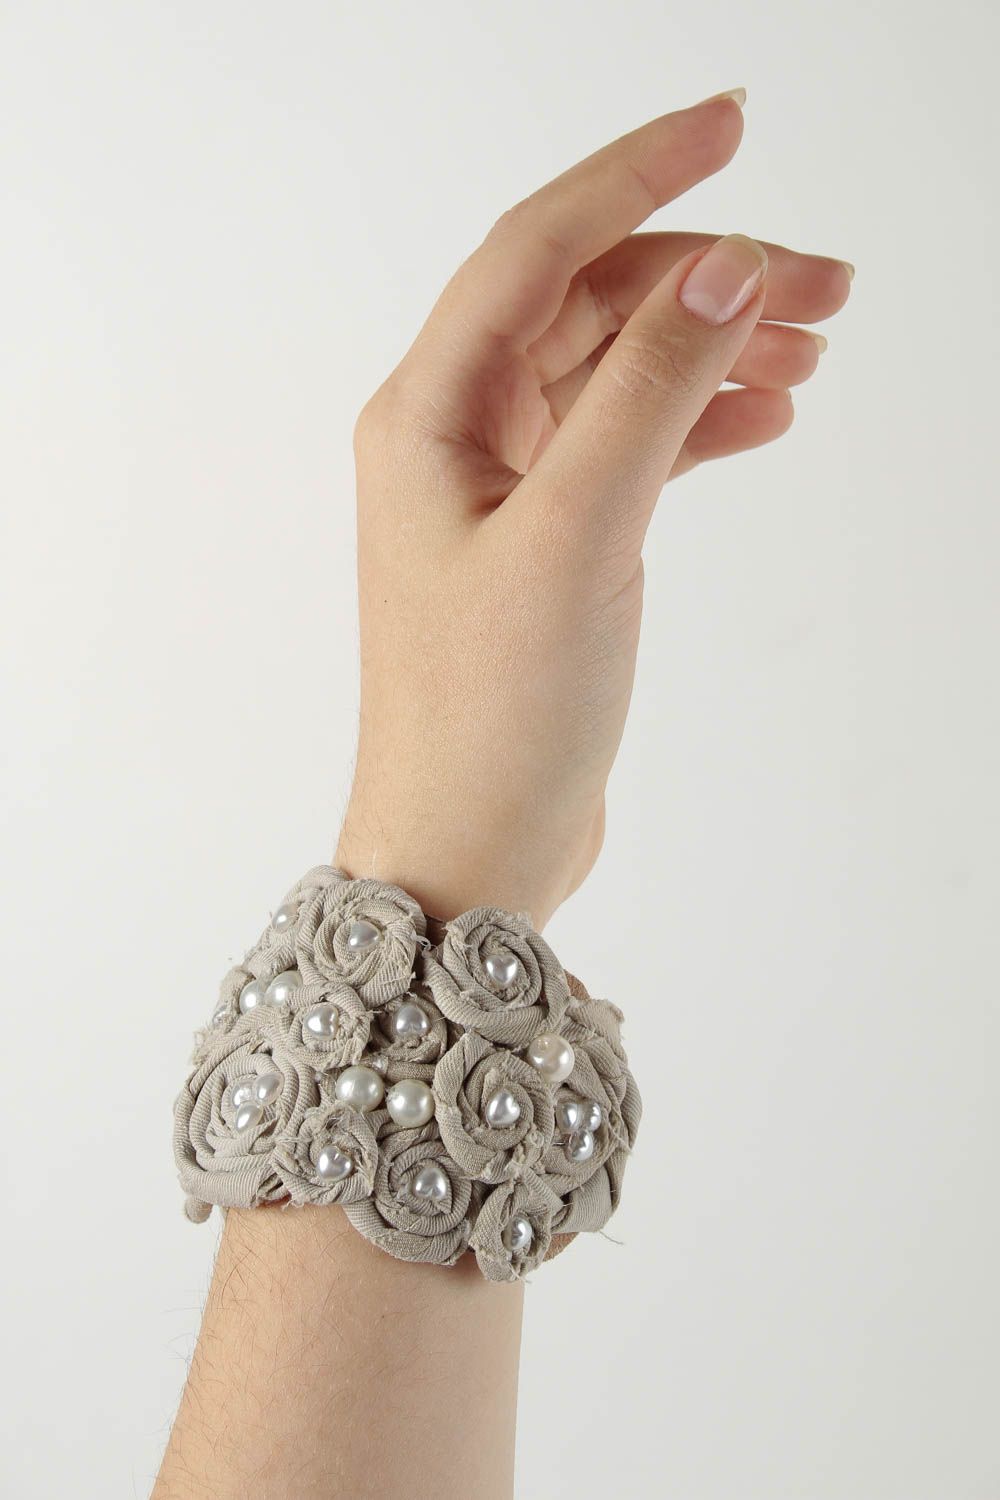 Handmade wrist bracelet fashion jewelry bracelets for women best gifts for girls photo 1